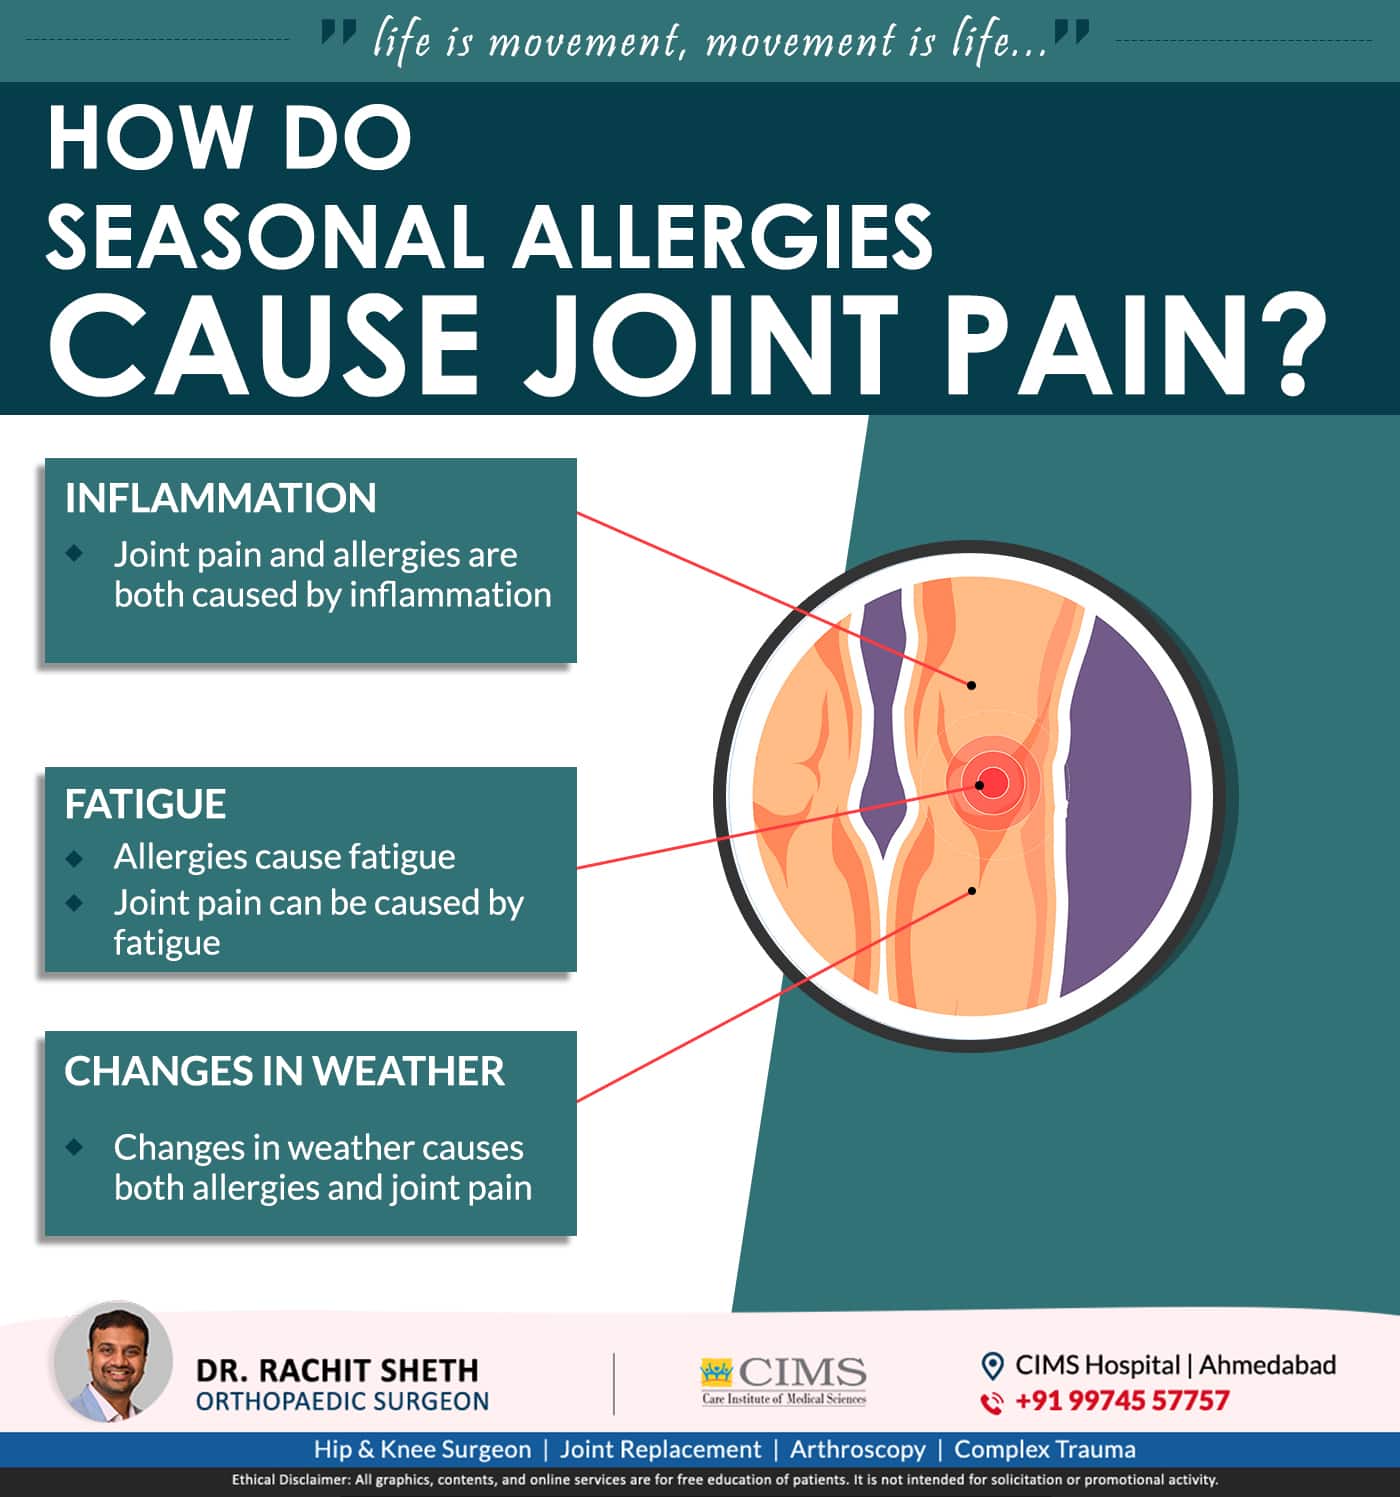 Seasonal allergies cause Joint Pain